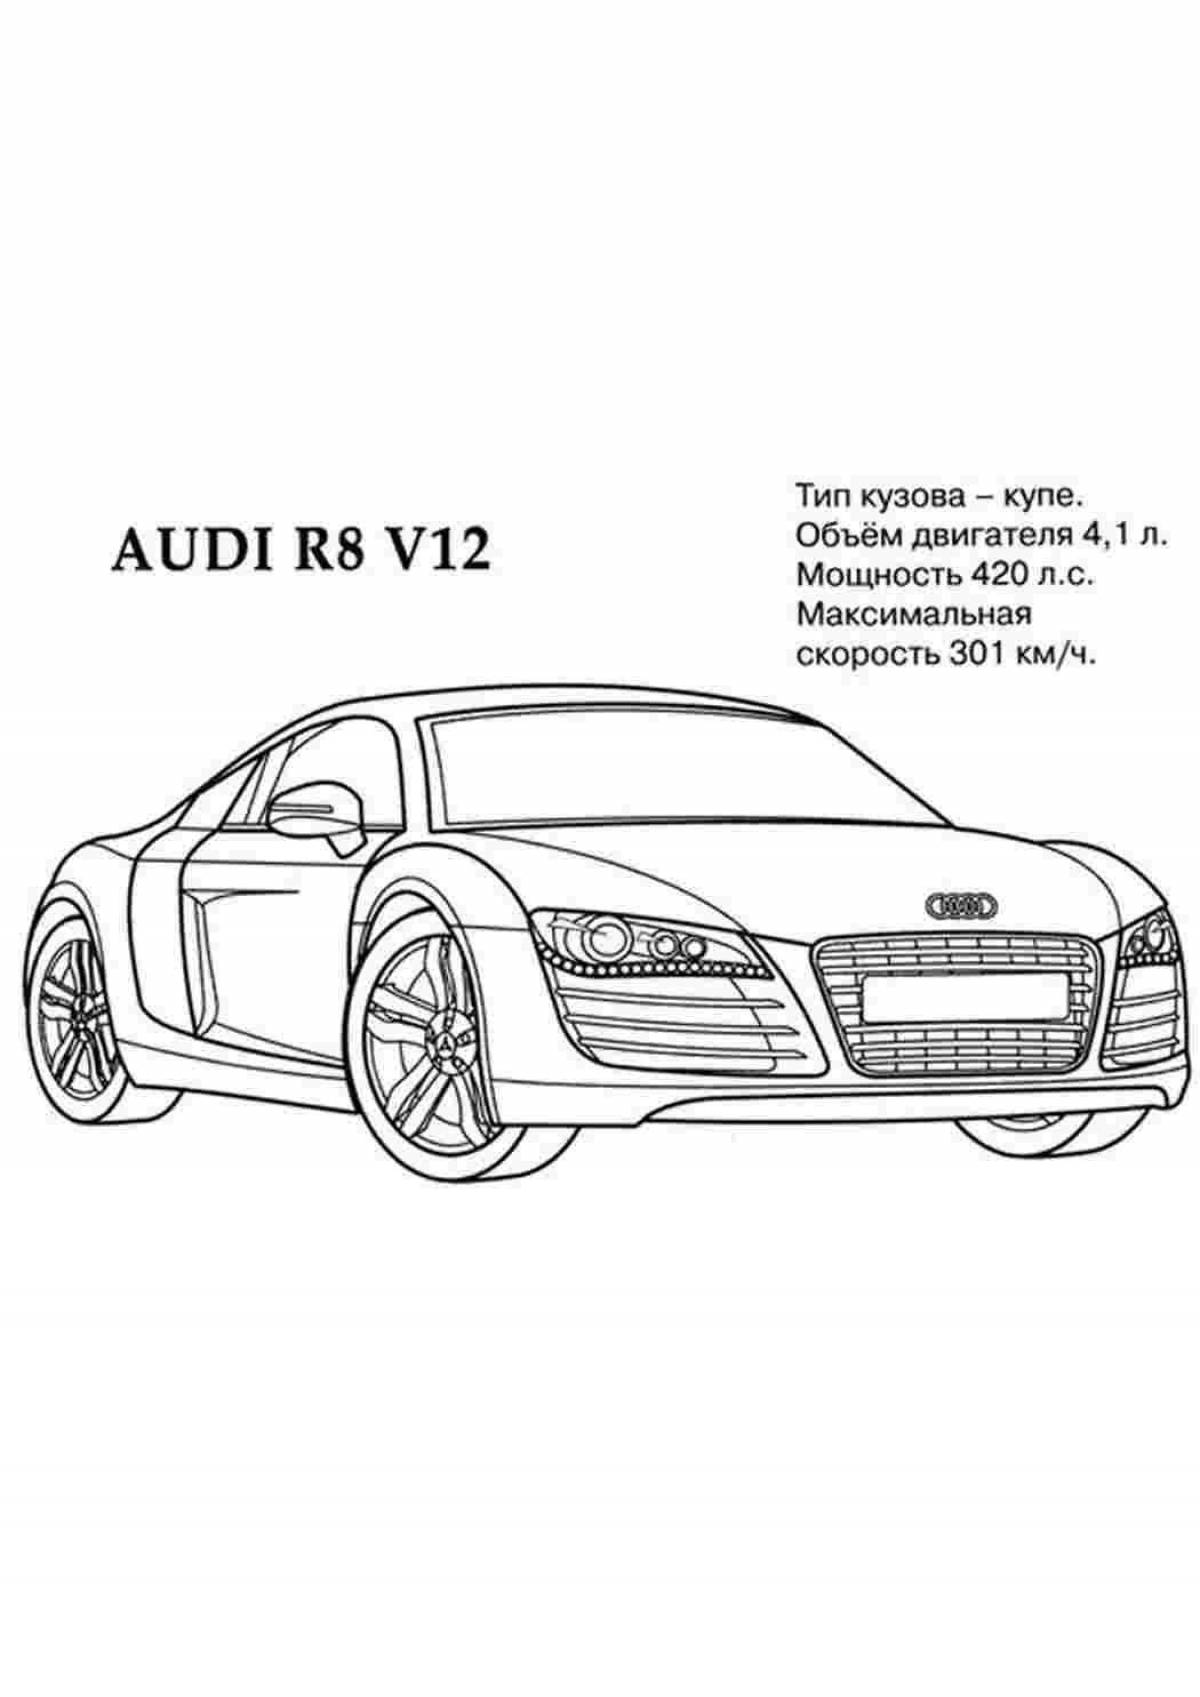 Audi trendy coloring book for kids